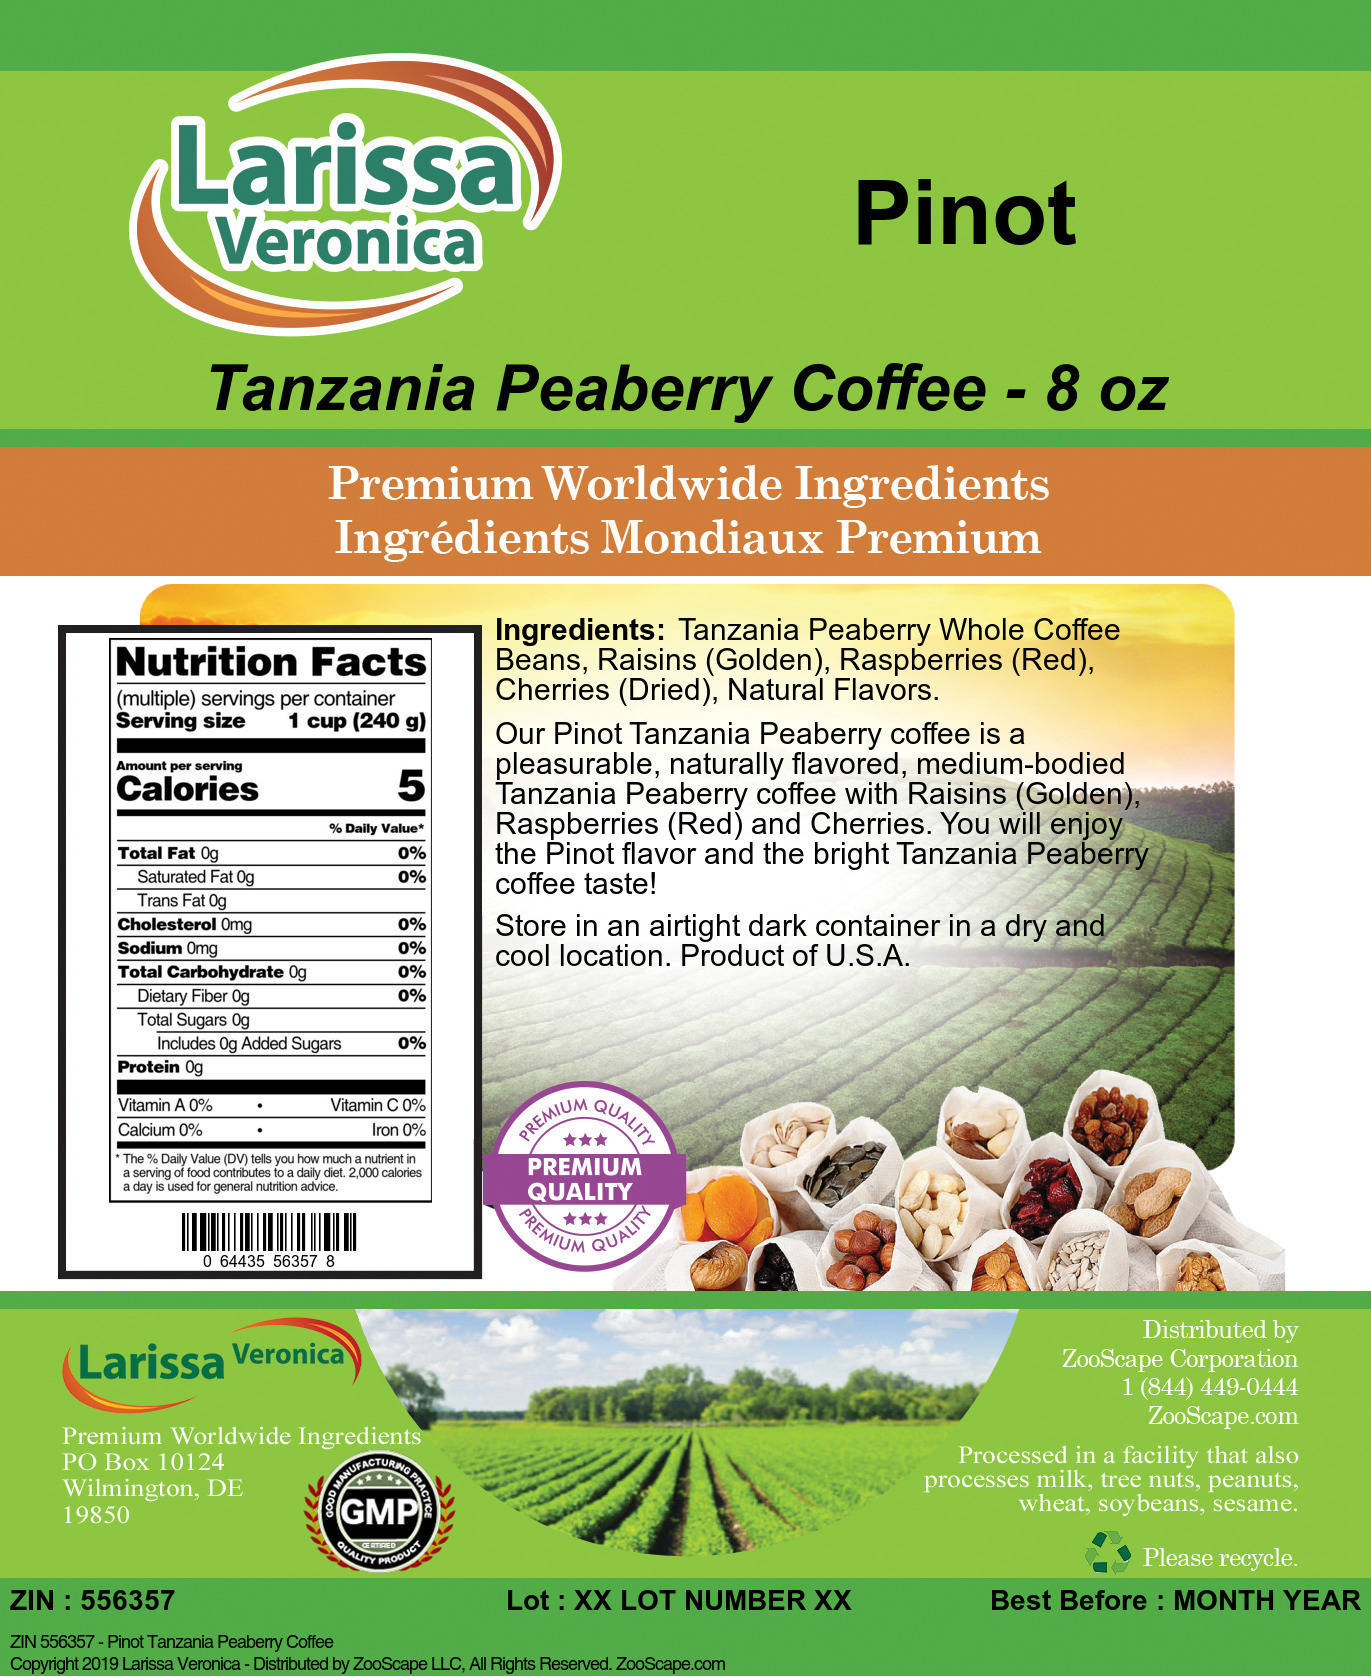 Pinot Tanzania Peaberry Coffee - Label